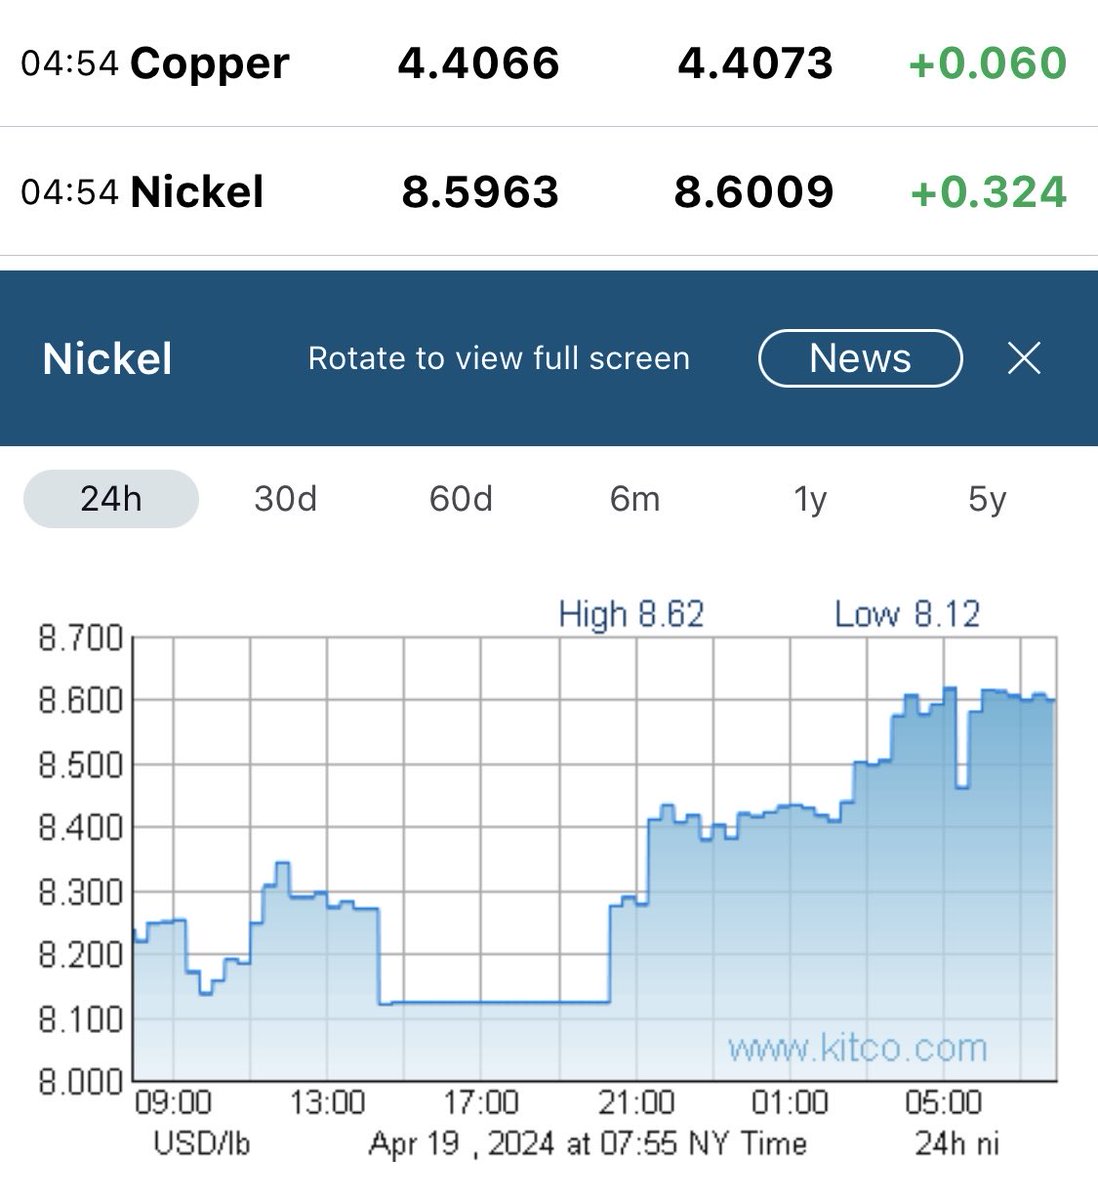 Nickel High: 8.62 - Up 1.52 (21%) from Feb.9 low of 7.10 📈  #CanadaNickel 
#Samsung 8.7%
#AngloAmerican 7.6%
#AgnicoEagle 11%
#SudburyTwoPointO
#NetZeroNickel 
#TM  #Nickel  $CNIKF
$NOB.V $CNC.V $SHL.V  #EV
#BatteryMetals #Reddit #Mining #Glencore #BHP #Vale #Timmins #Canada